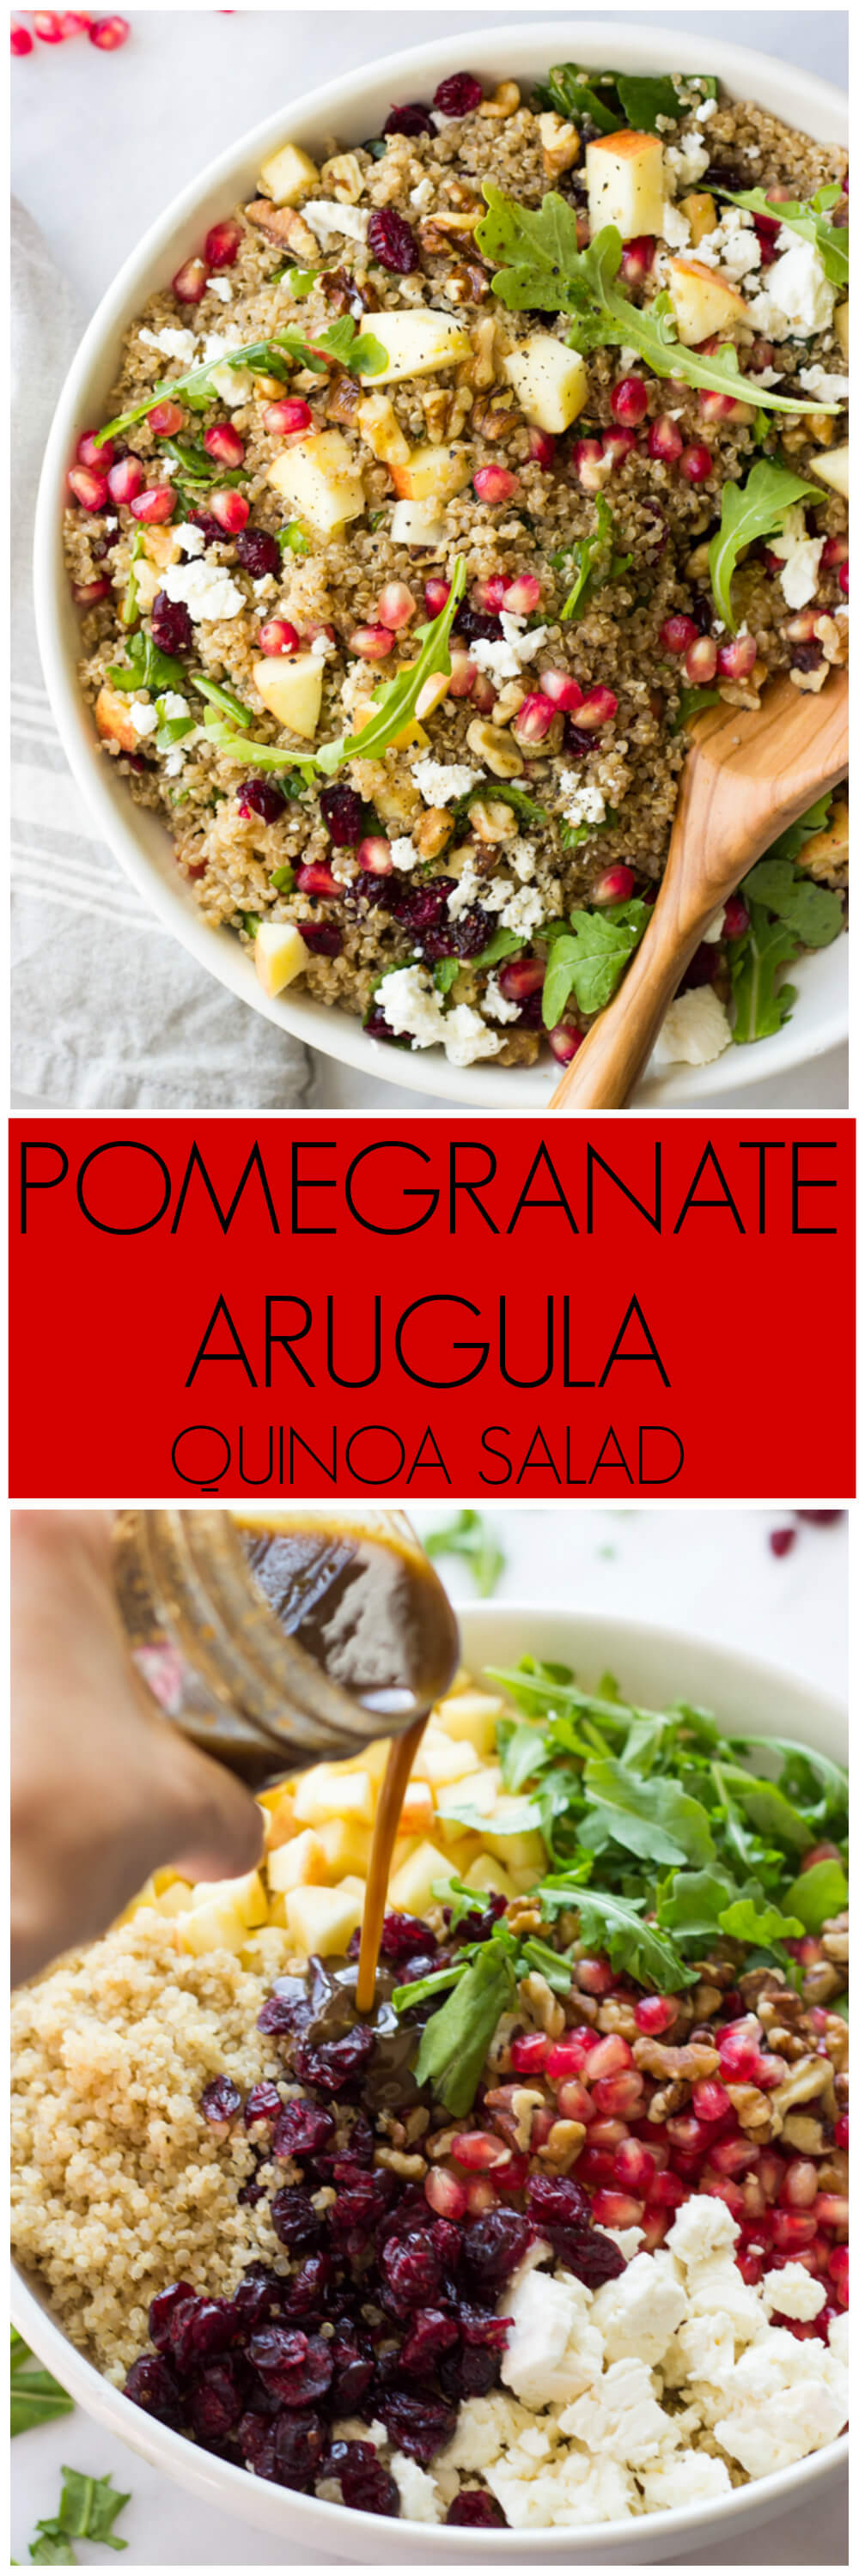 Pomegranate Arugula Quinoa Salad - most festive and delicious salad you will ever make! | littlebroken.com @littlebroken